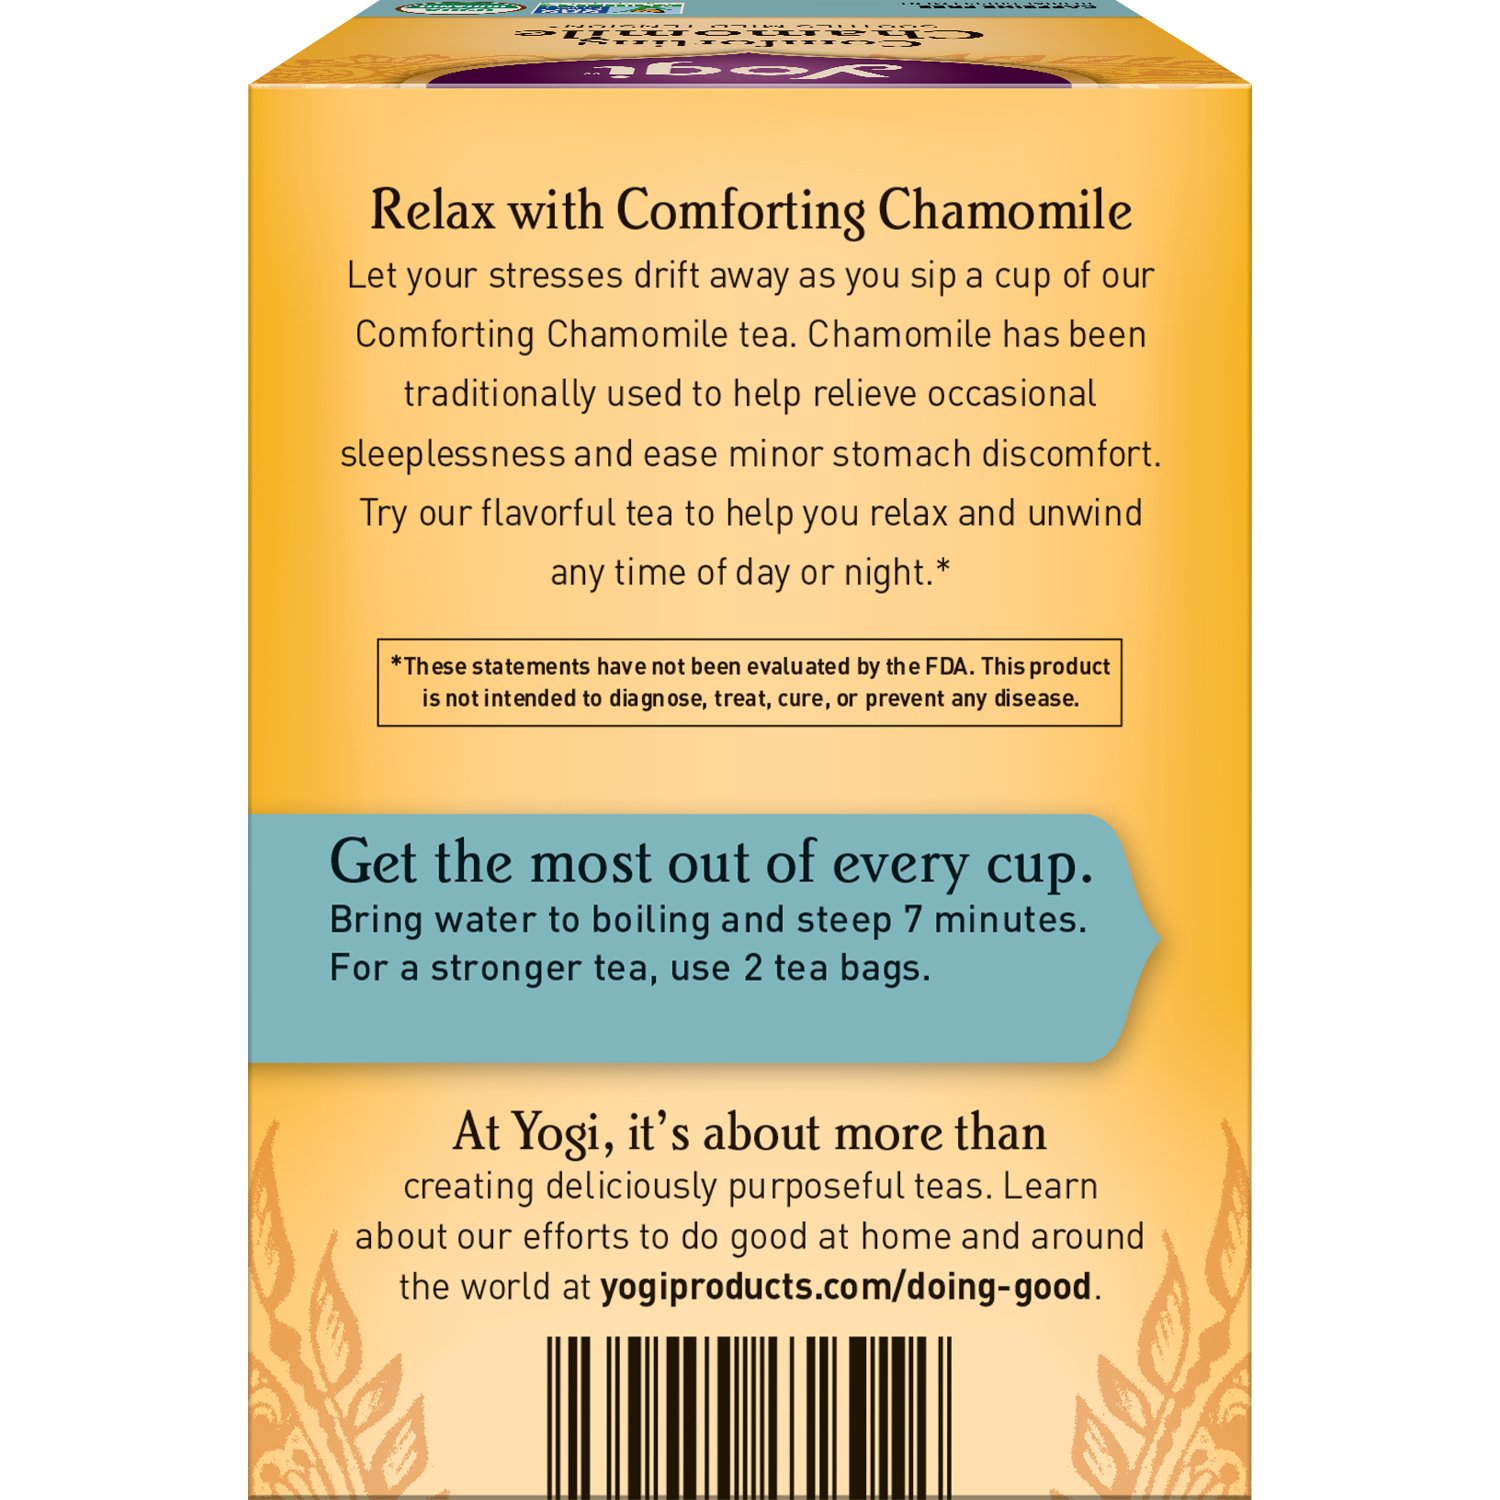 Yogi Tea Comforting Chamomile Tea - 16 Tea Bags per Pack (4 Packs) - Organic Chamomile Tea Bags - Supports a Good Night's Sleep & Occasional Stomach Discomfort - Made from Organic Chamomile Flower